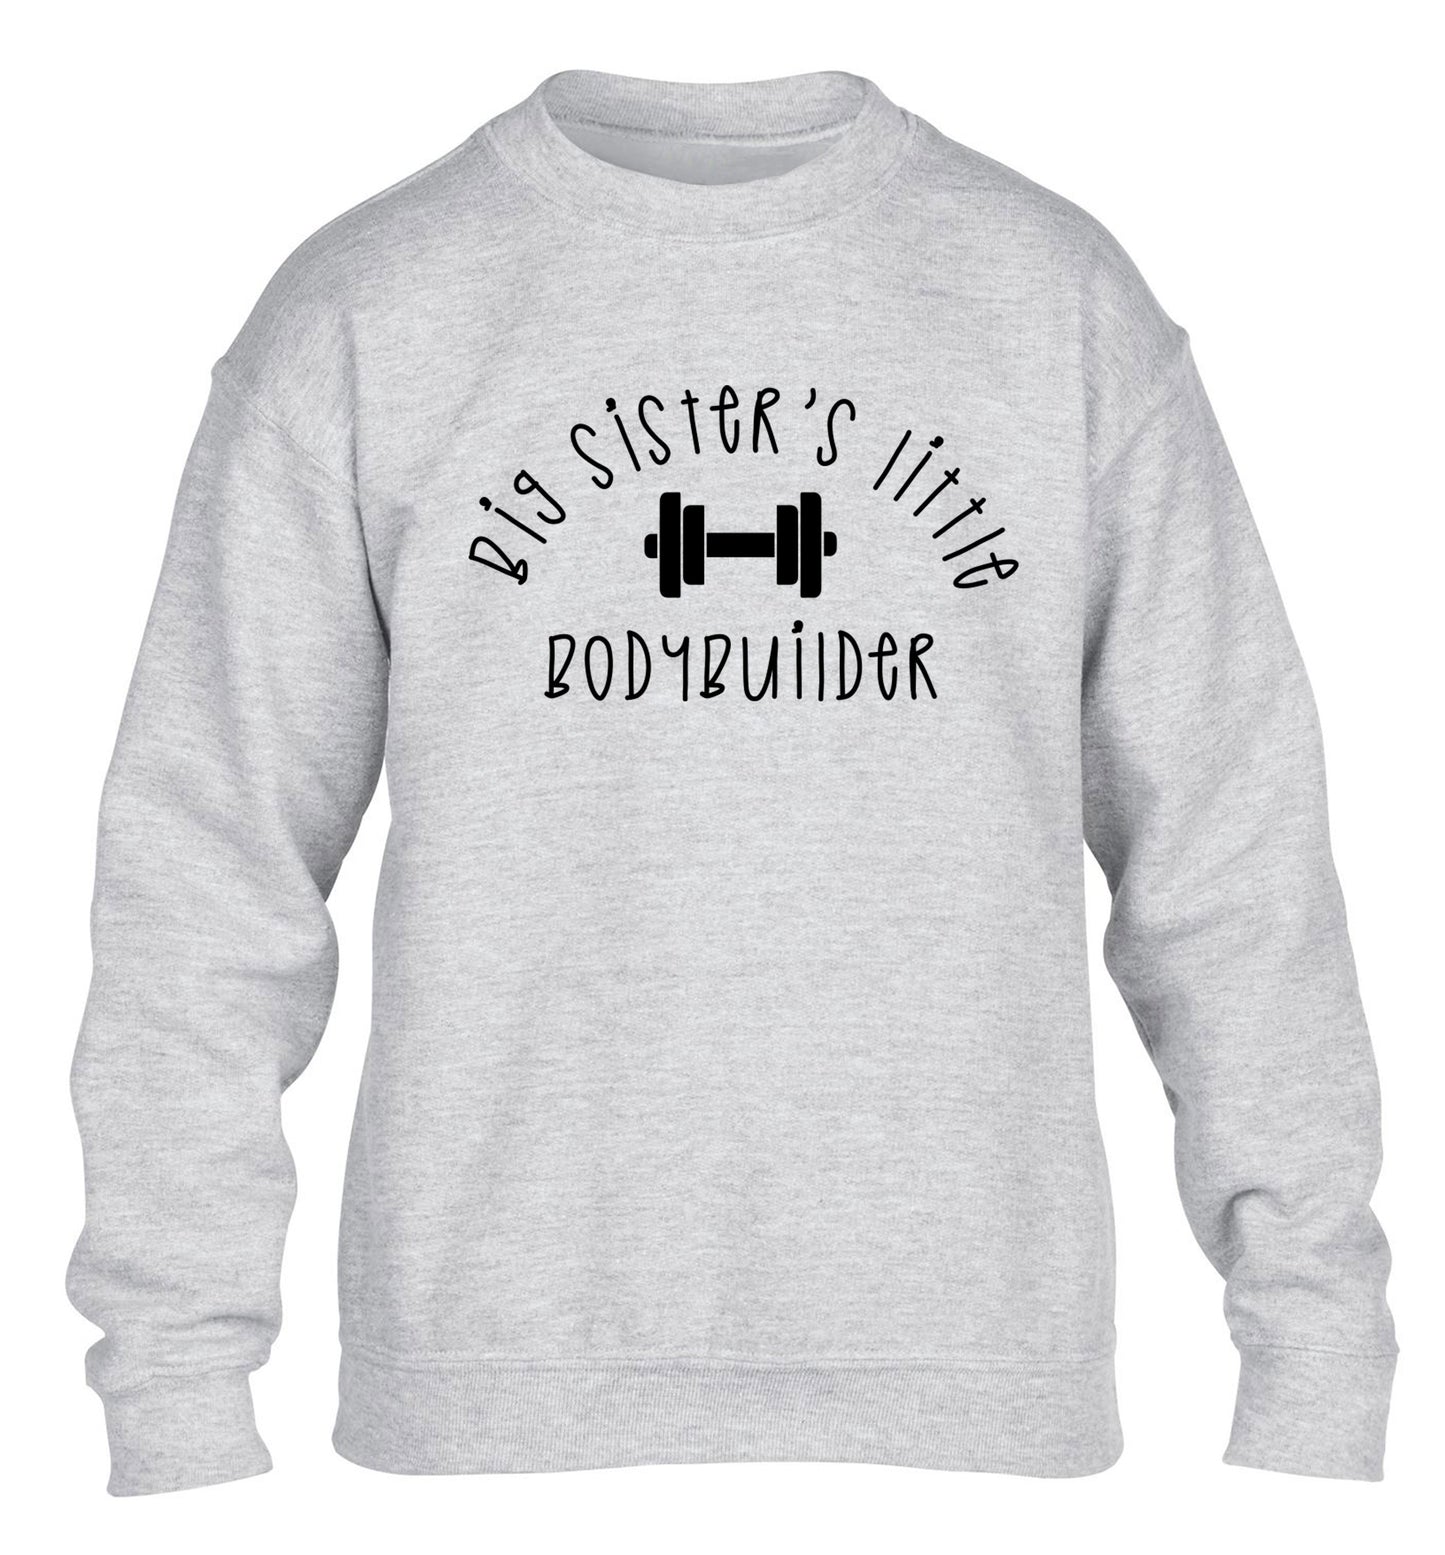 Big sister's little bodybuilder children's grey sweater 12-14 Years